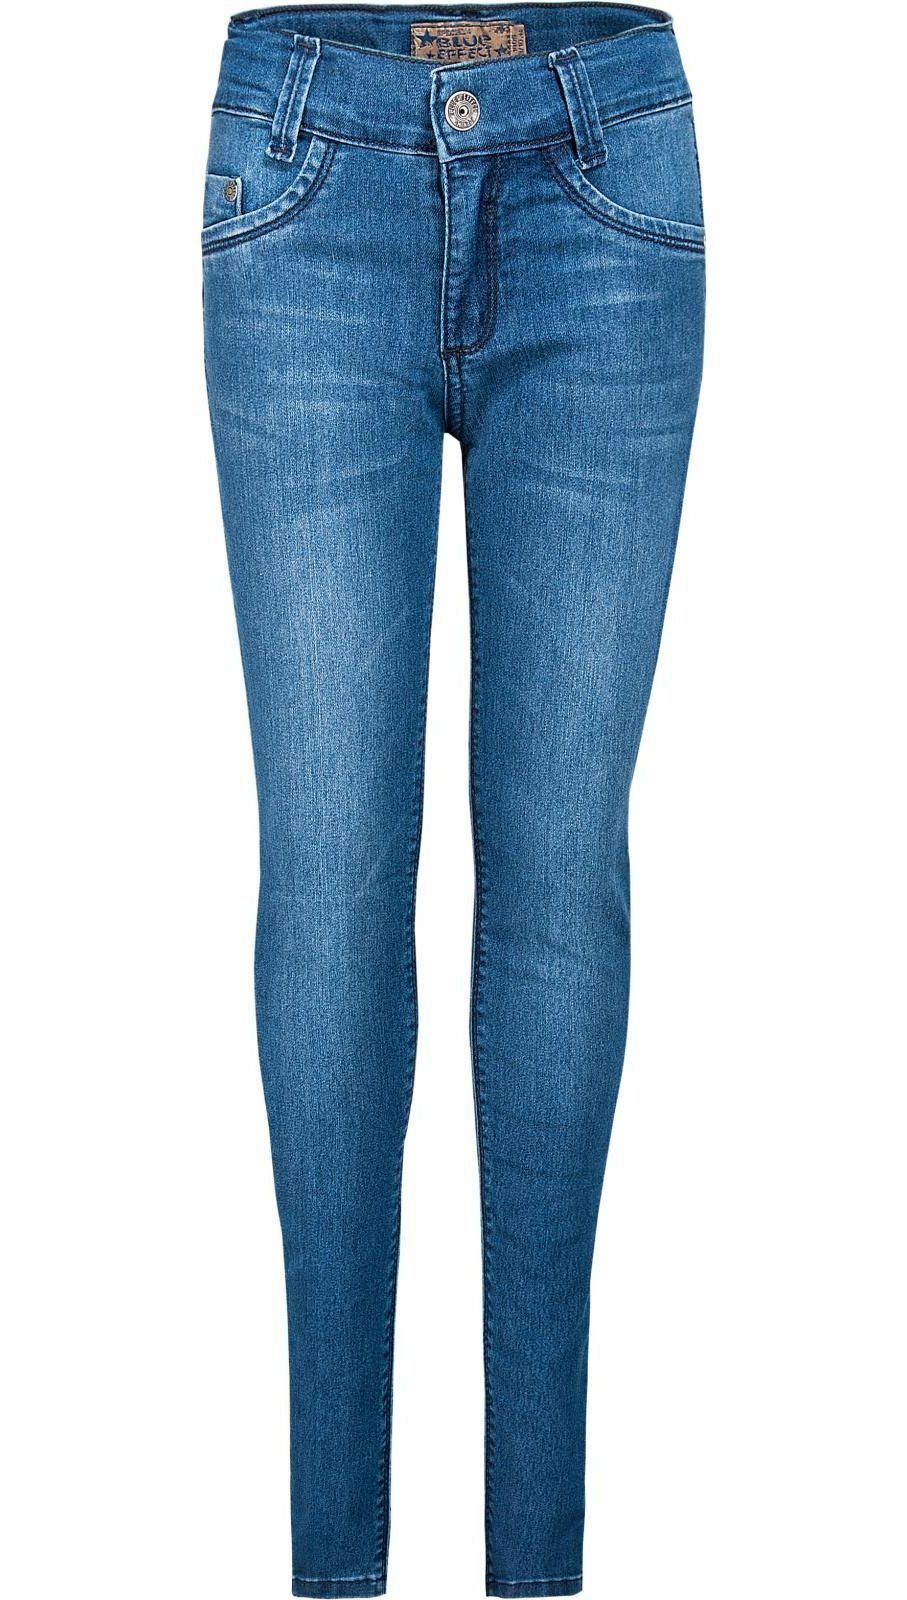 denim Bundweite blue extra slim Slim-fit-Jeans Jeggings schmal EFFECT BLUE